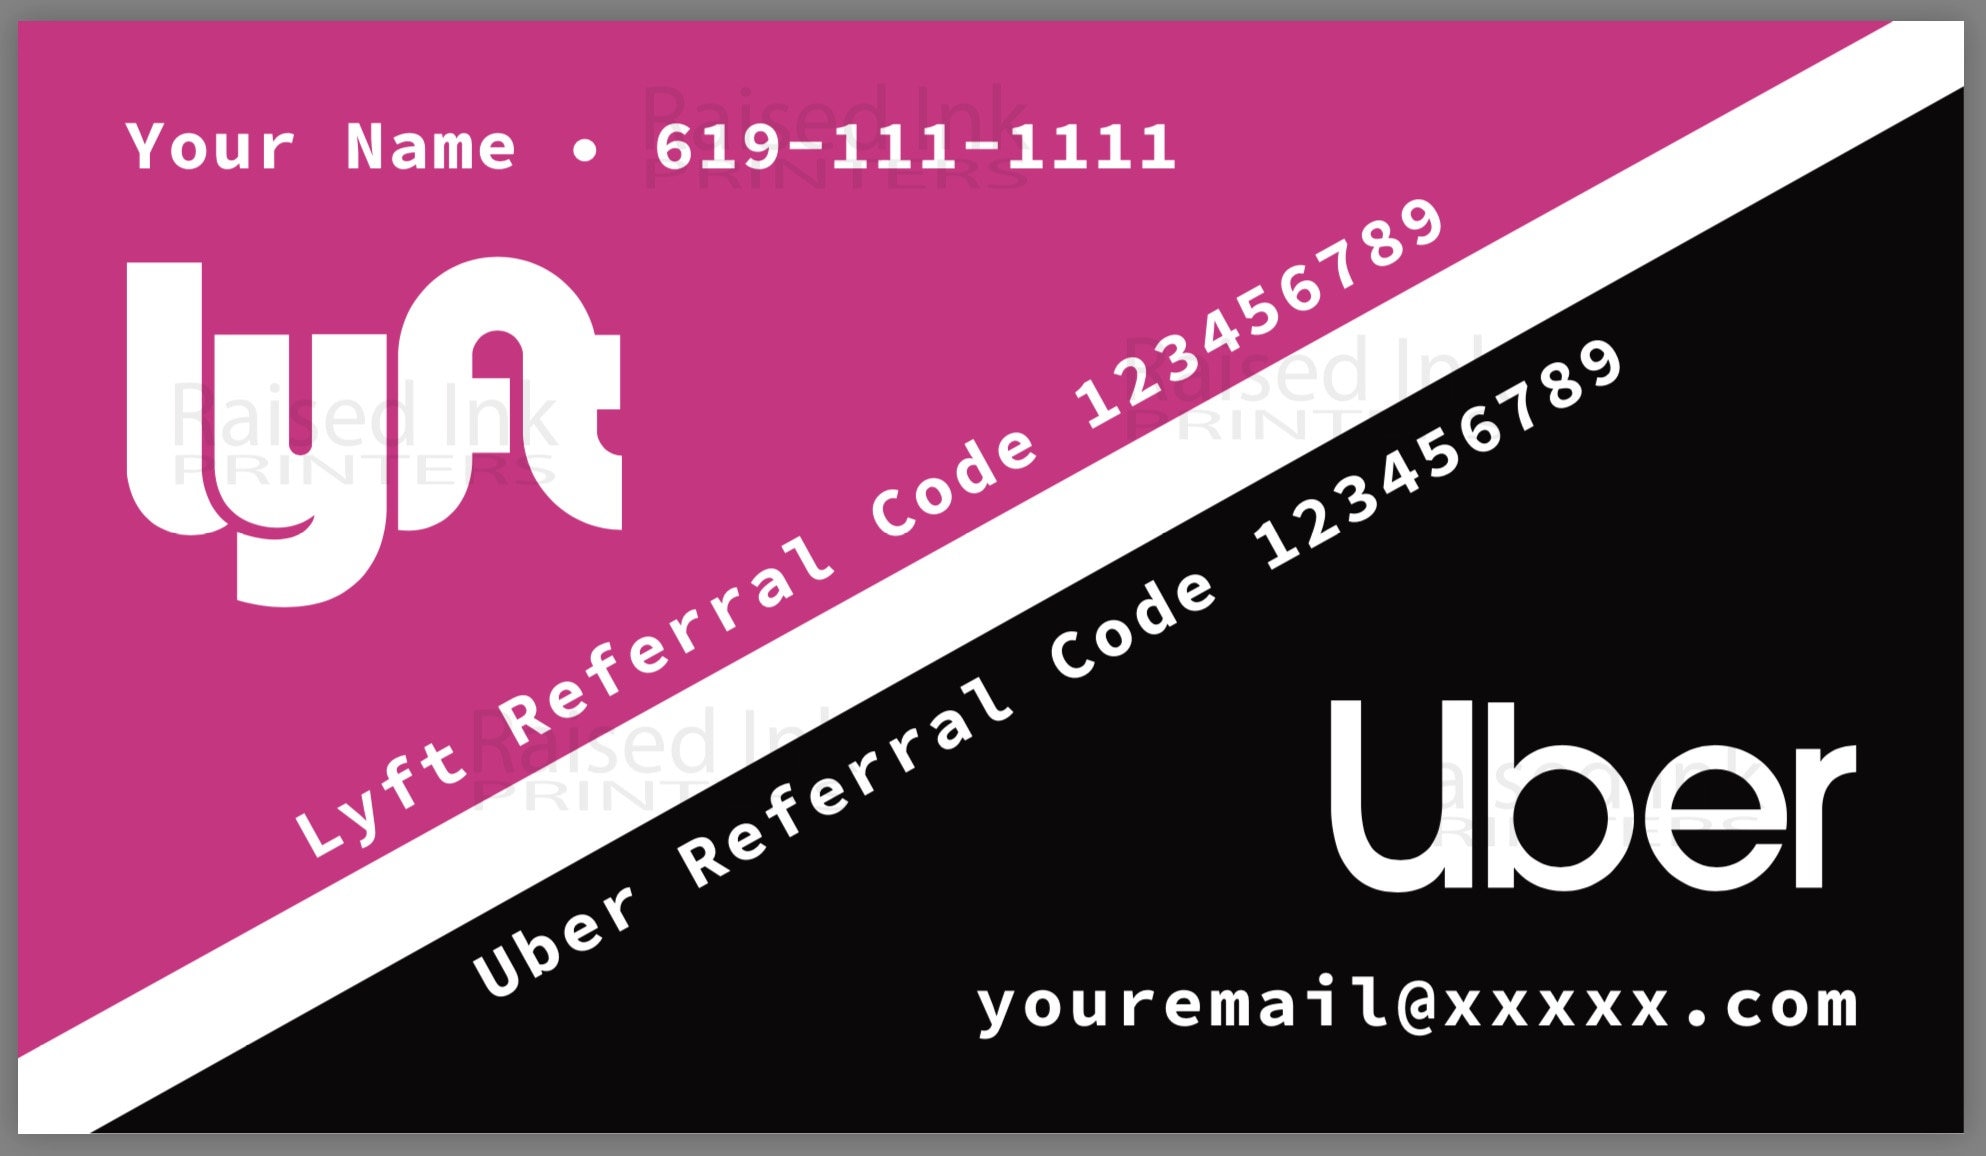 uber lyft business cards 2 3